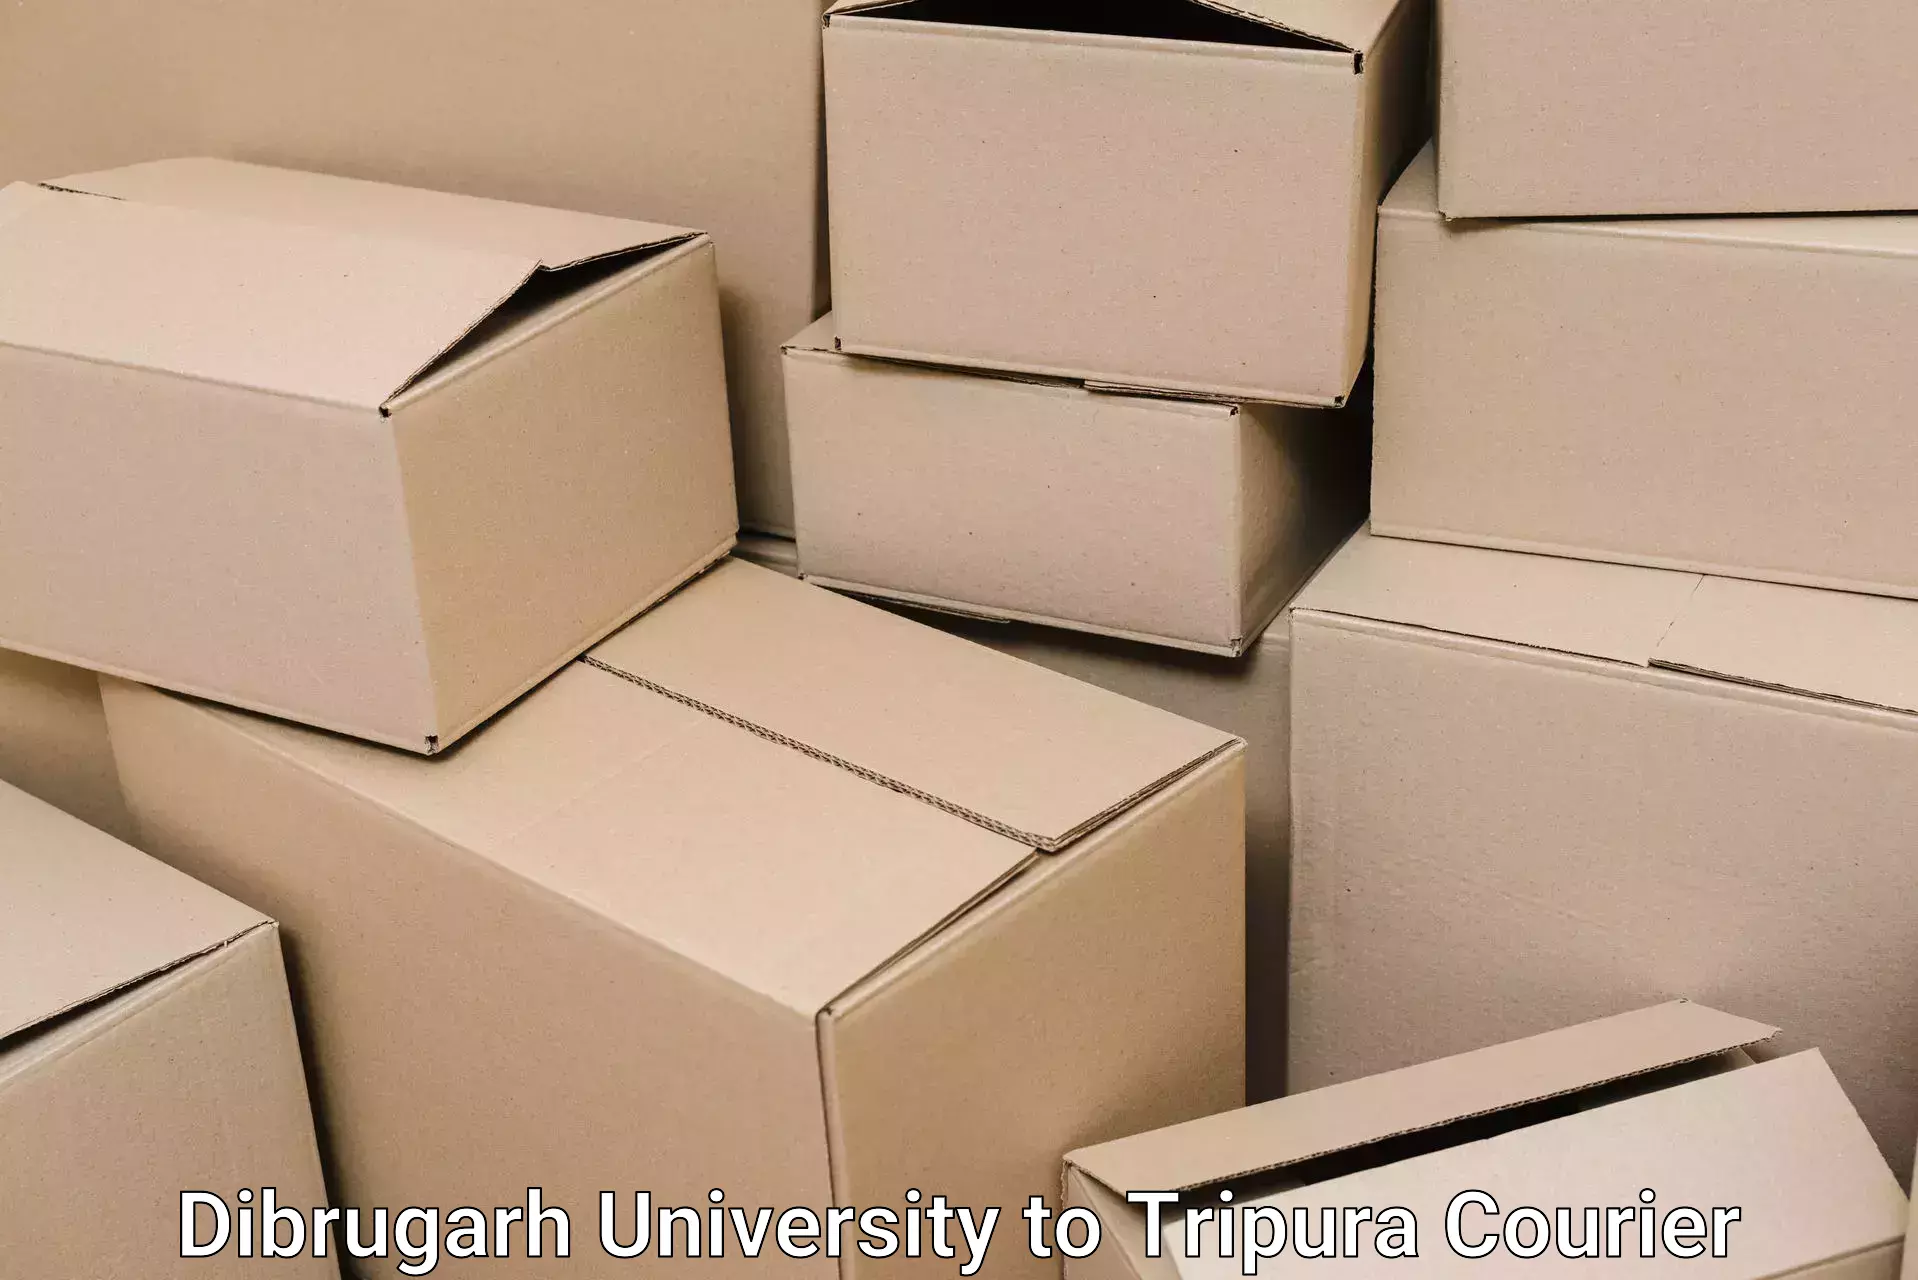 Household goods transport service Dibrugarh University to Tripura